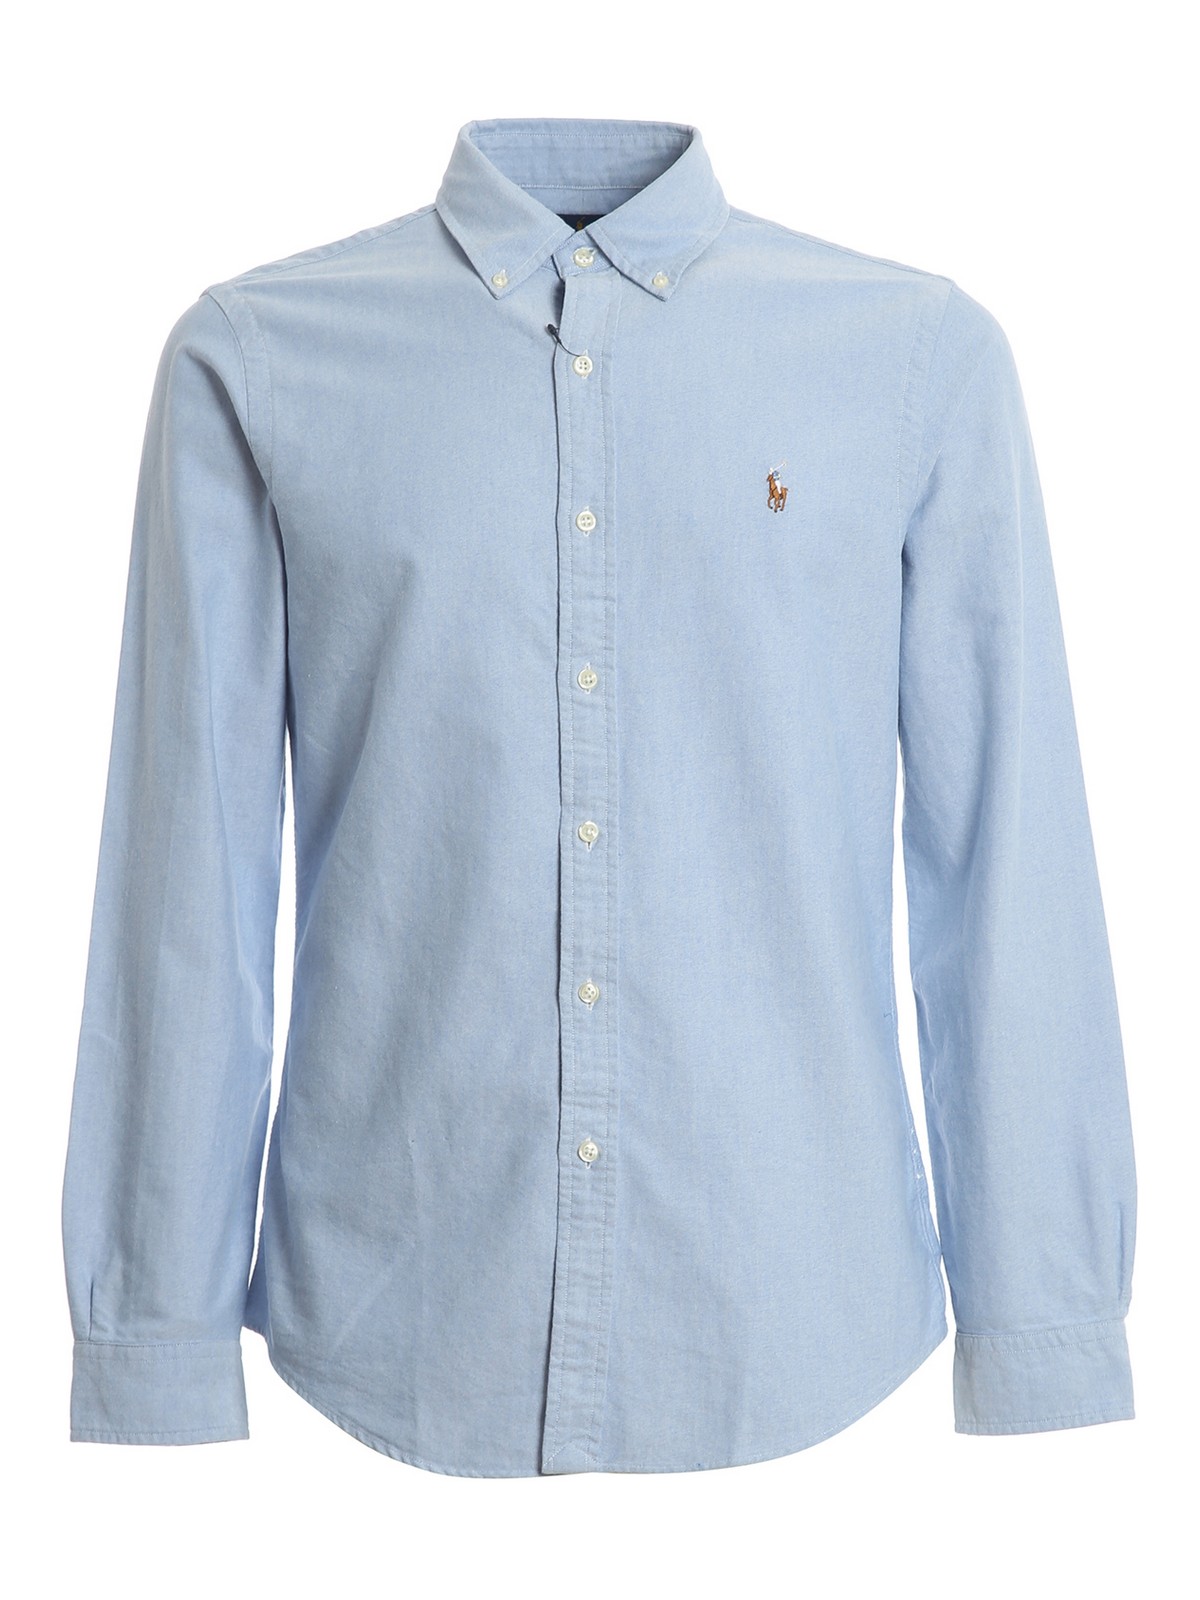 milla nautica regalo olvidar Camisas Polo Ralph Lauren - Camisa - Azul Claro - 710549084007 | iKRIX.com